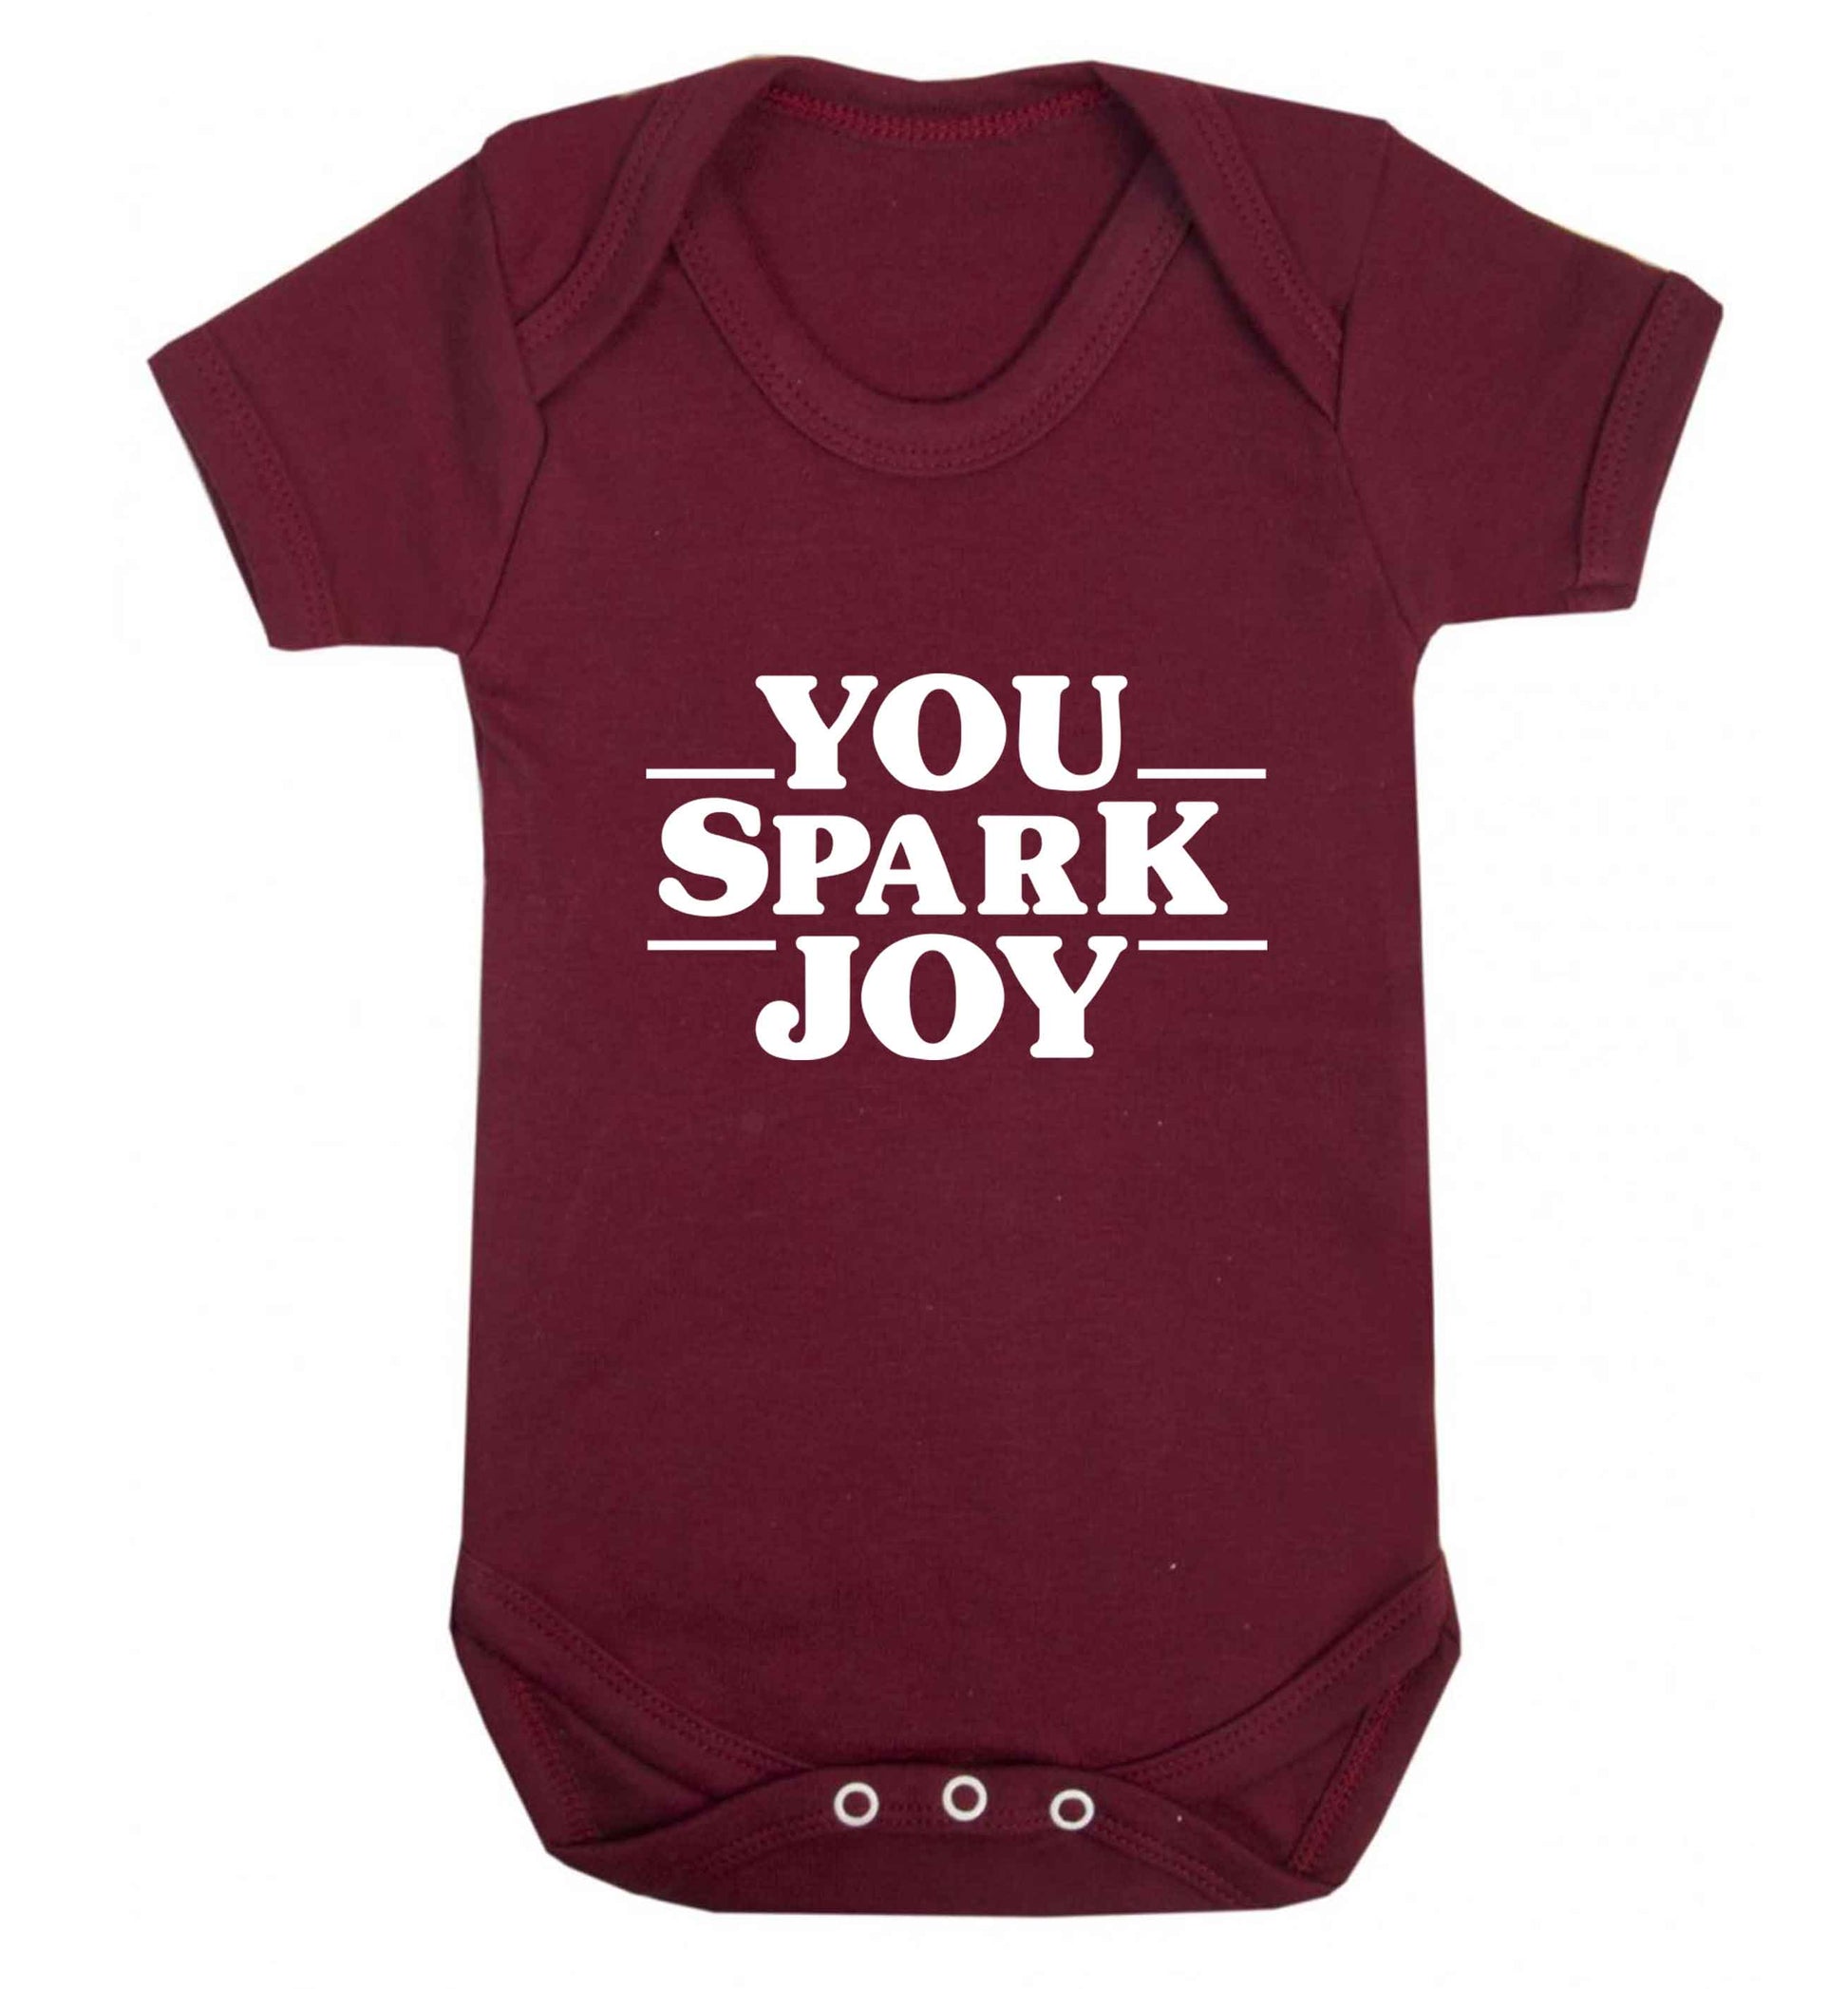 You spark joy baby vest maroon 18-24 months